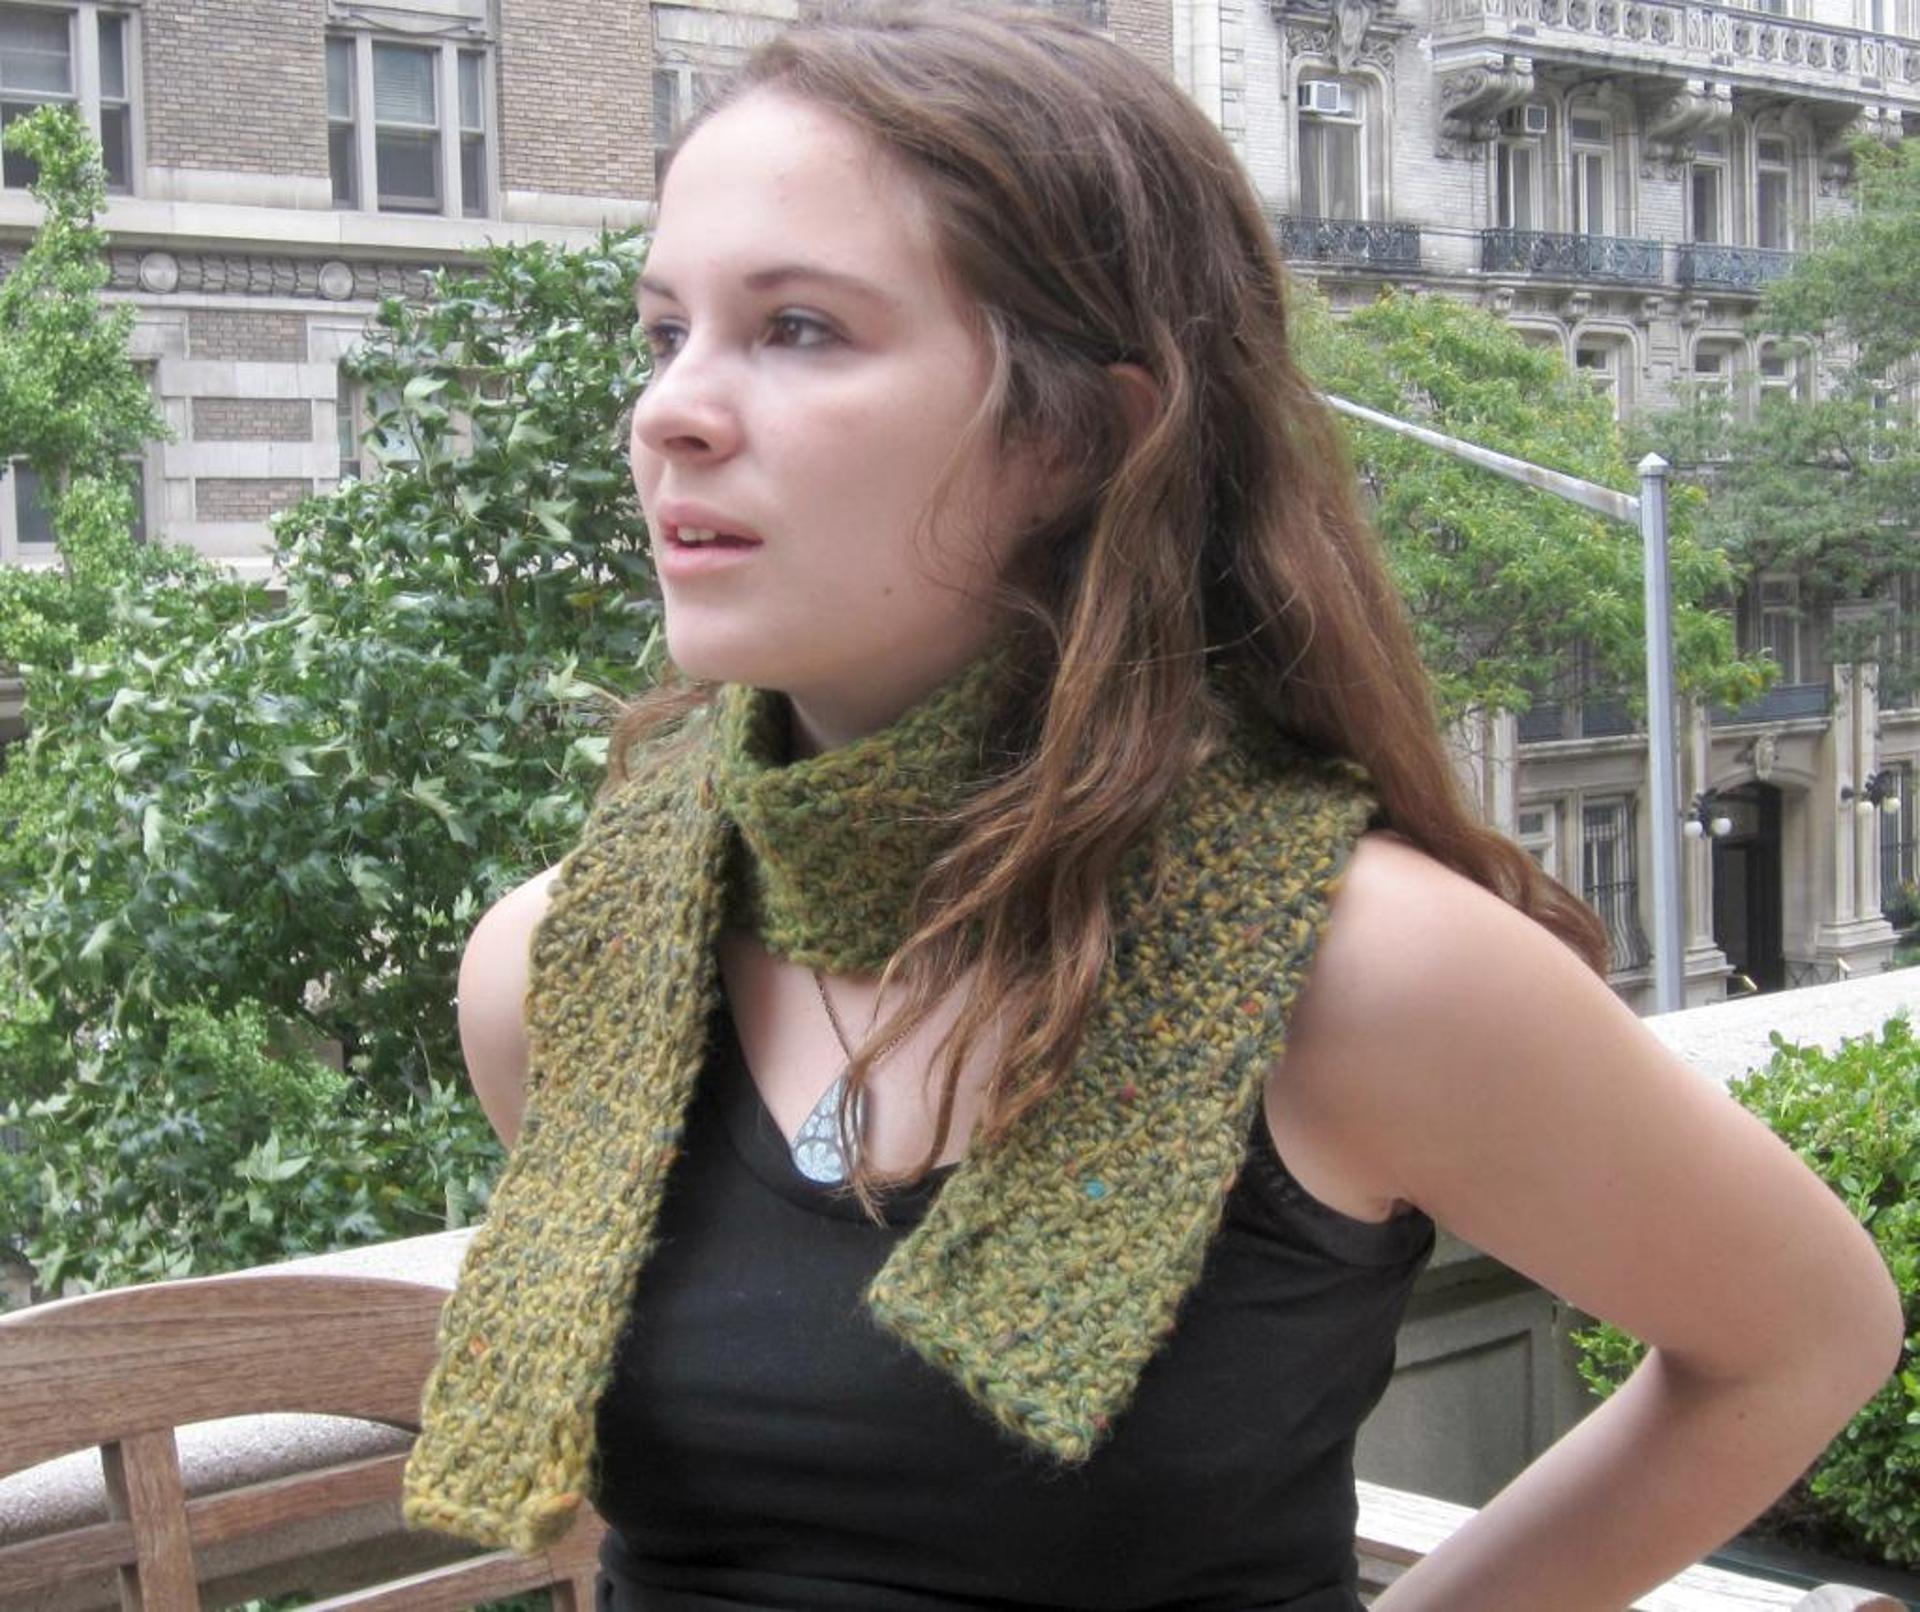 tunisian crochet scarf pattern